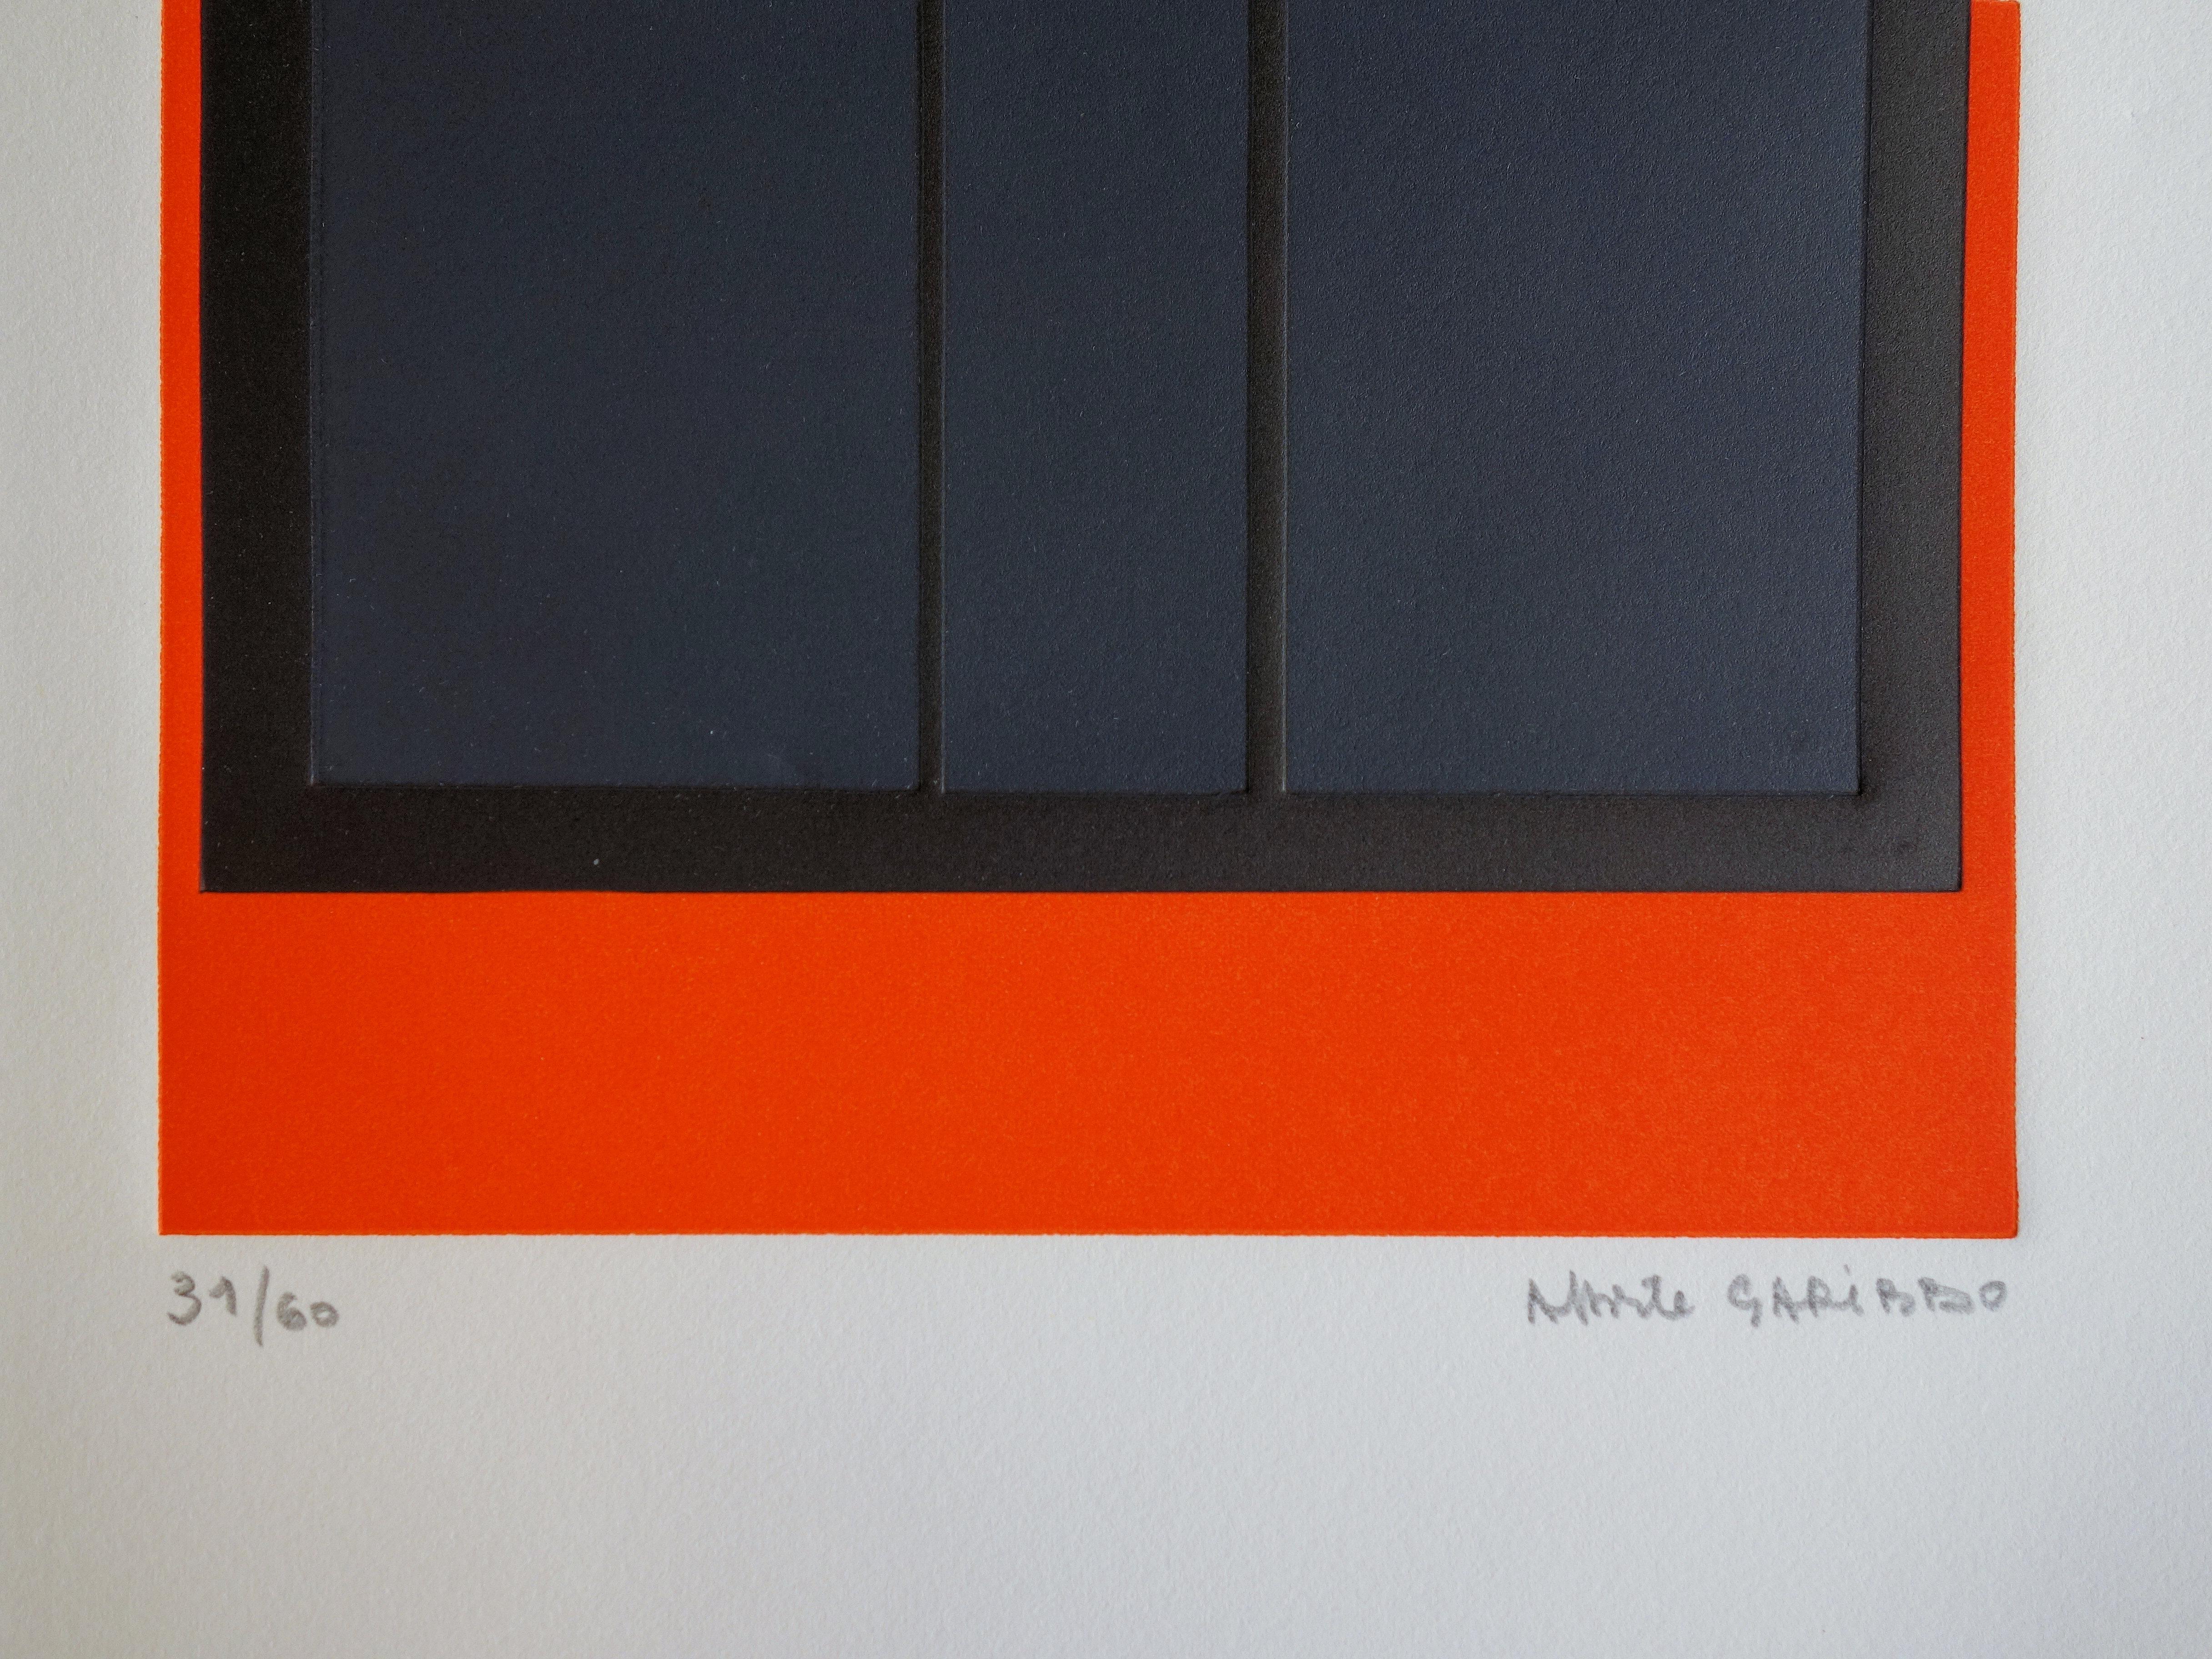 Black Squares on Orange - Original handsigned etching /60ex - Abstract Geometric Print by Alberte Garibbo